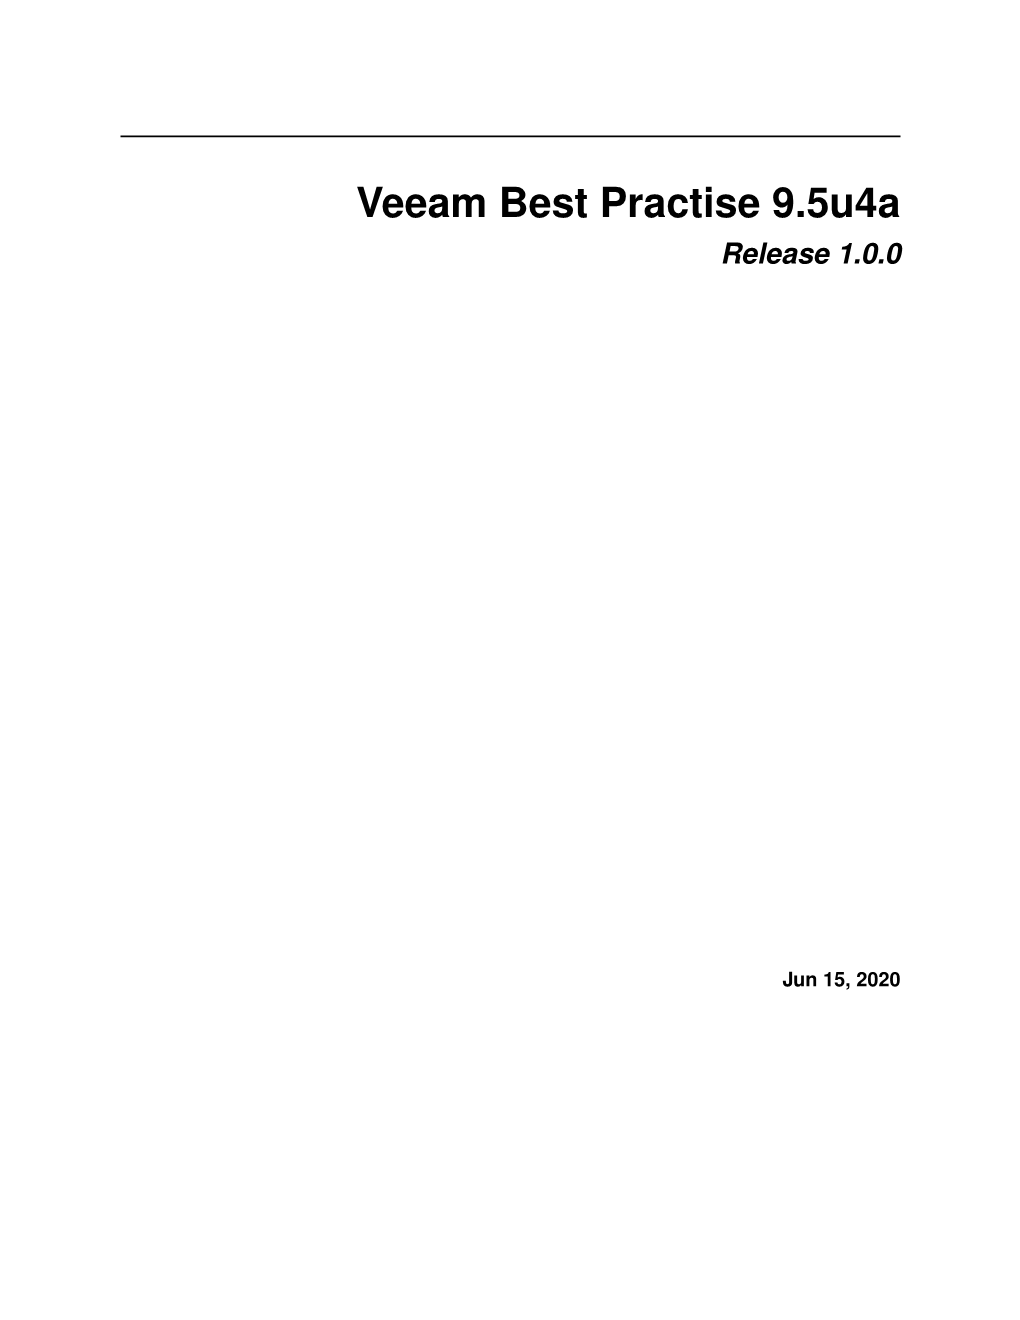 Veeam Best Practise 9.5U4a Release 1.0.0